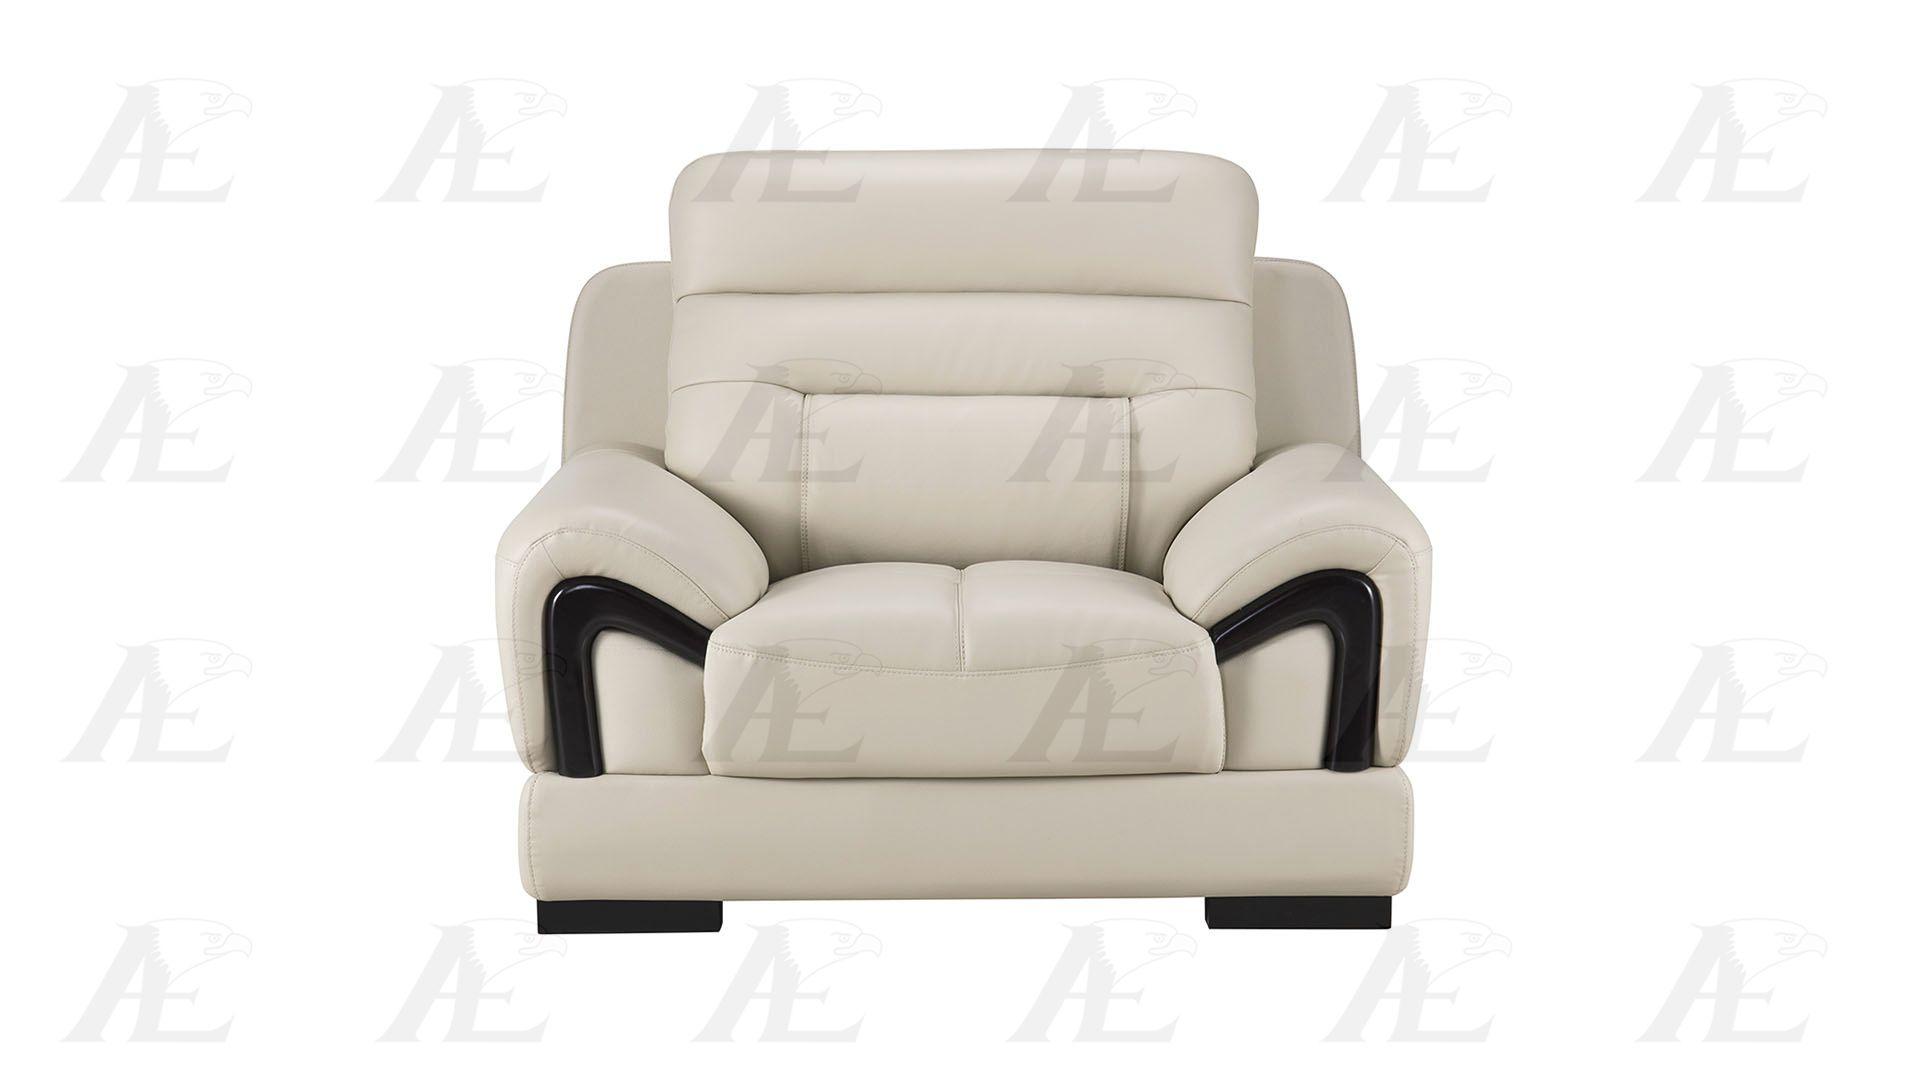 

    
EK-B120-LG Set-3 American Eagle Furniture Sofa Loveseat and Chair Set
